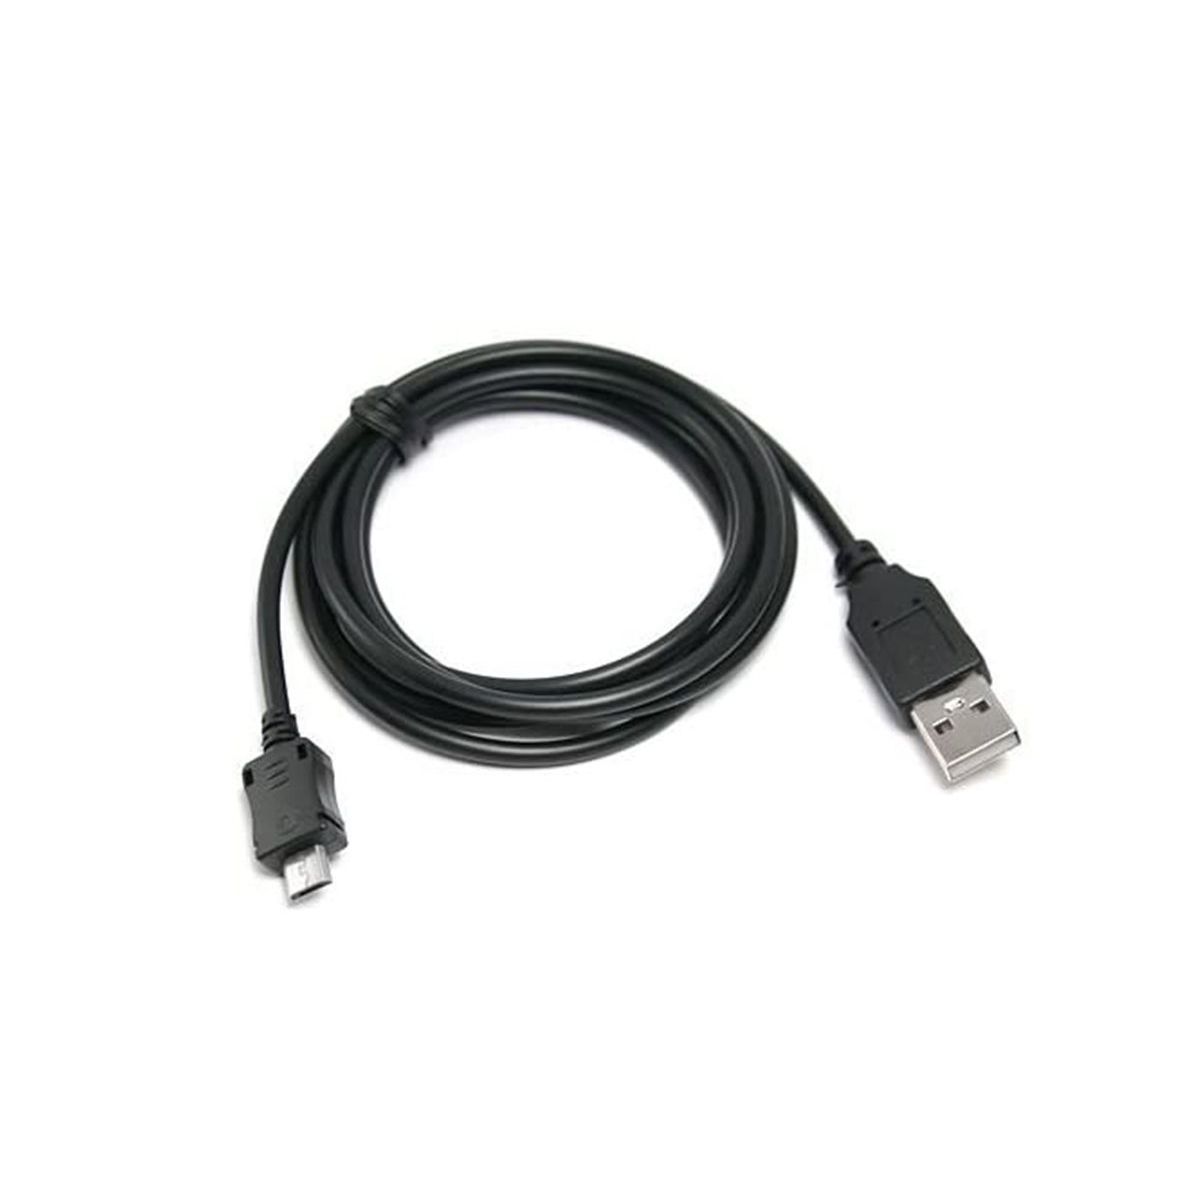 Cable USB Polar V650/M460/M400/A370 MICRO-A AMPHENOL 1 PC